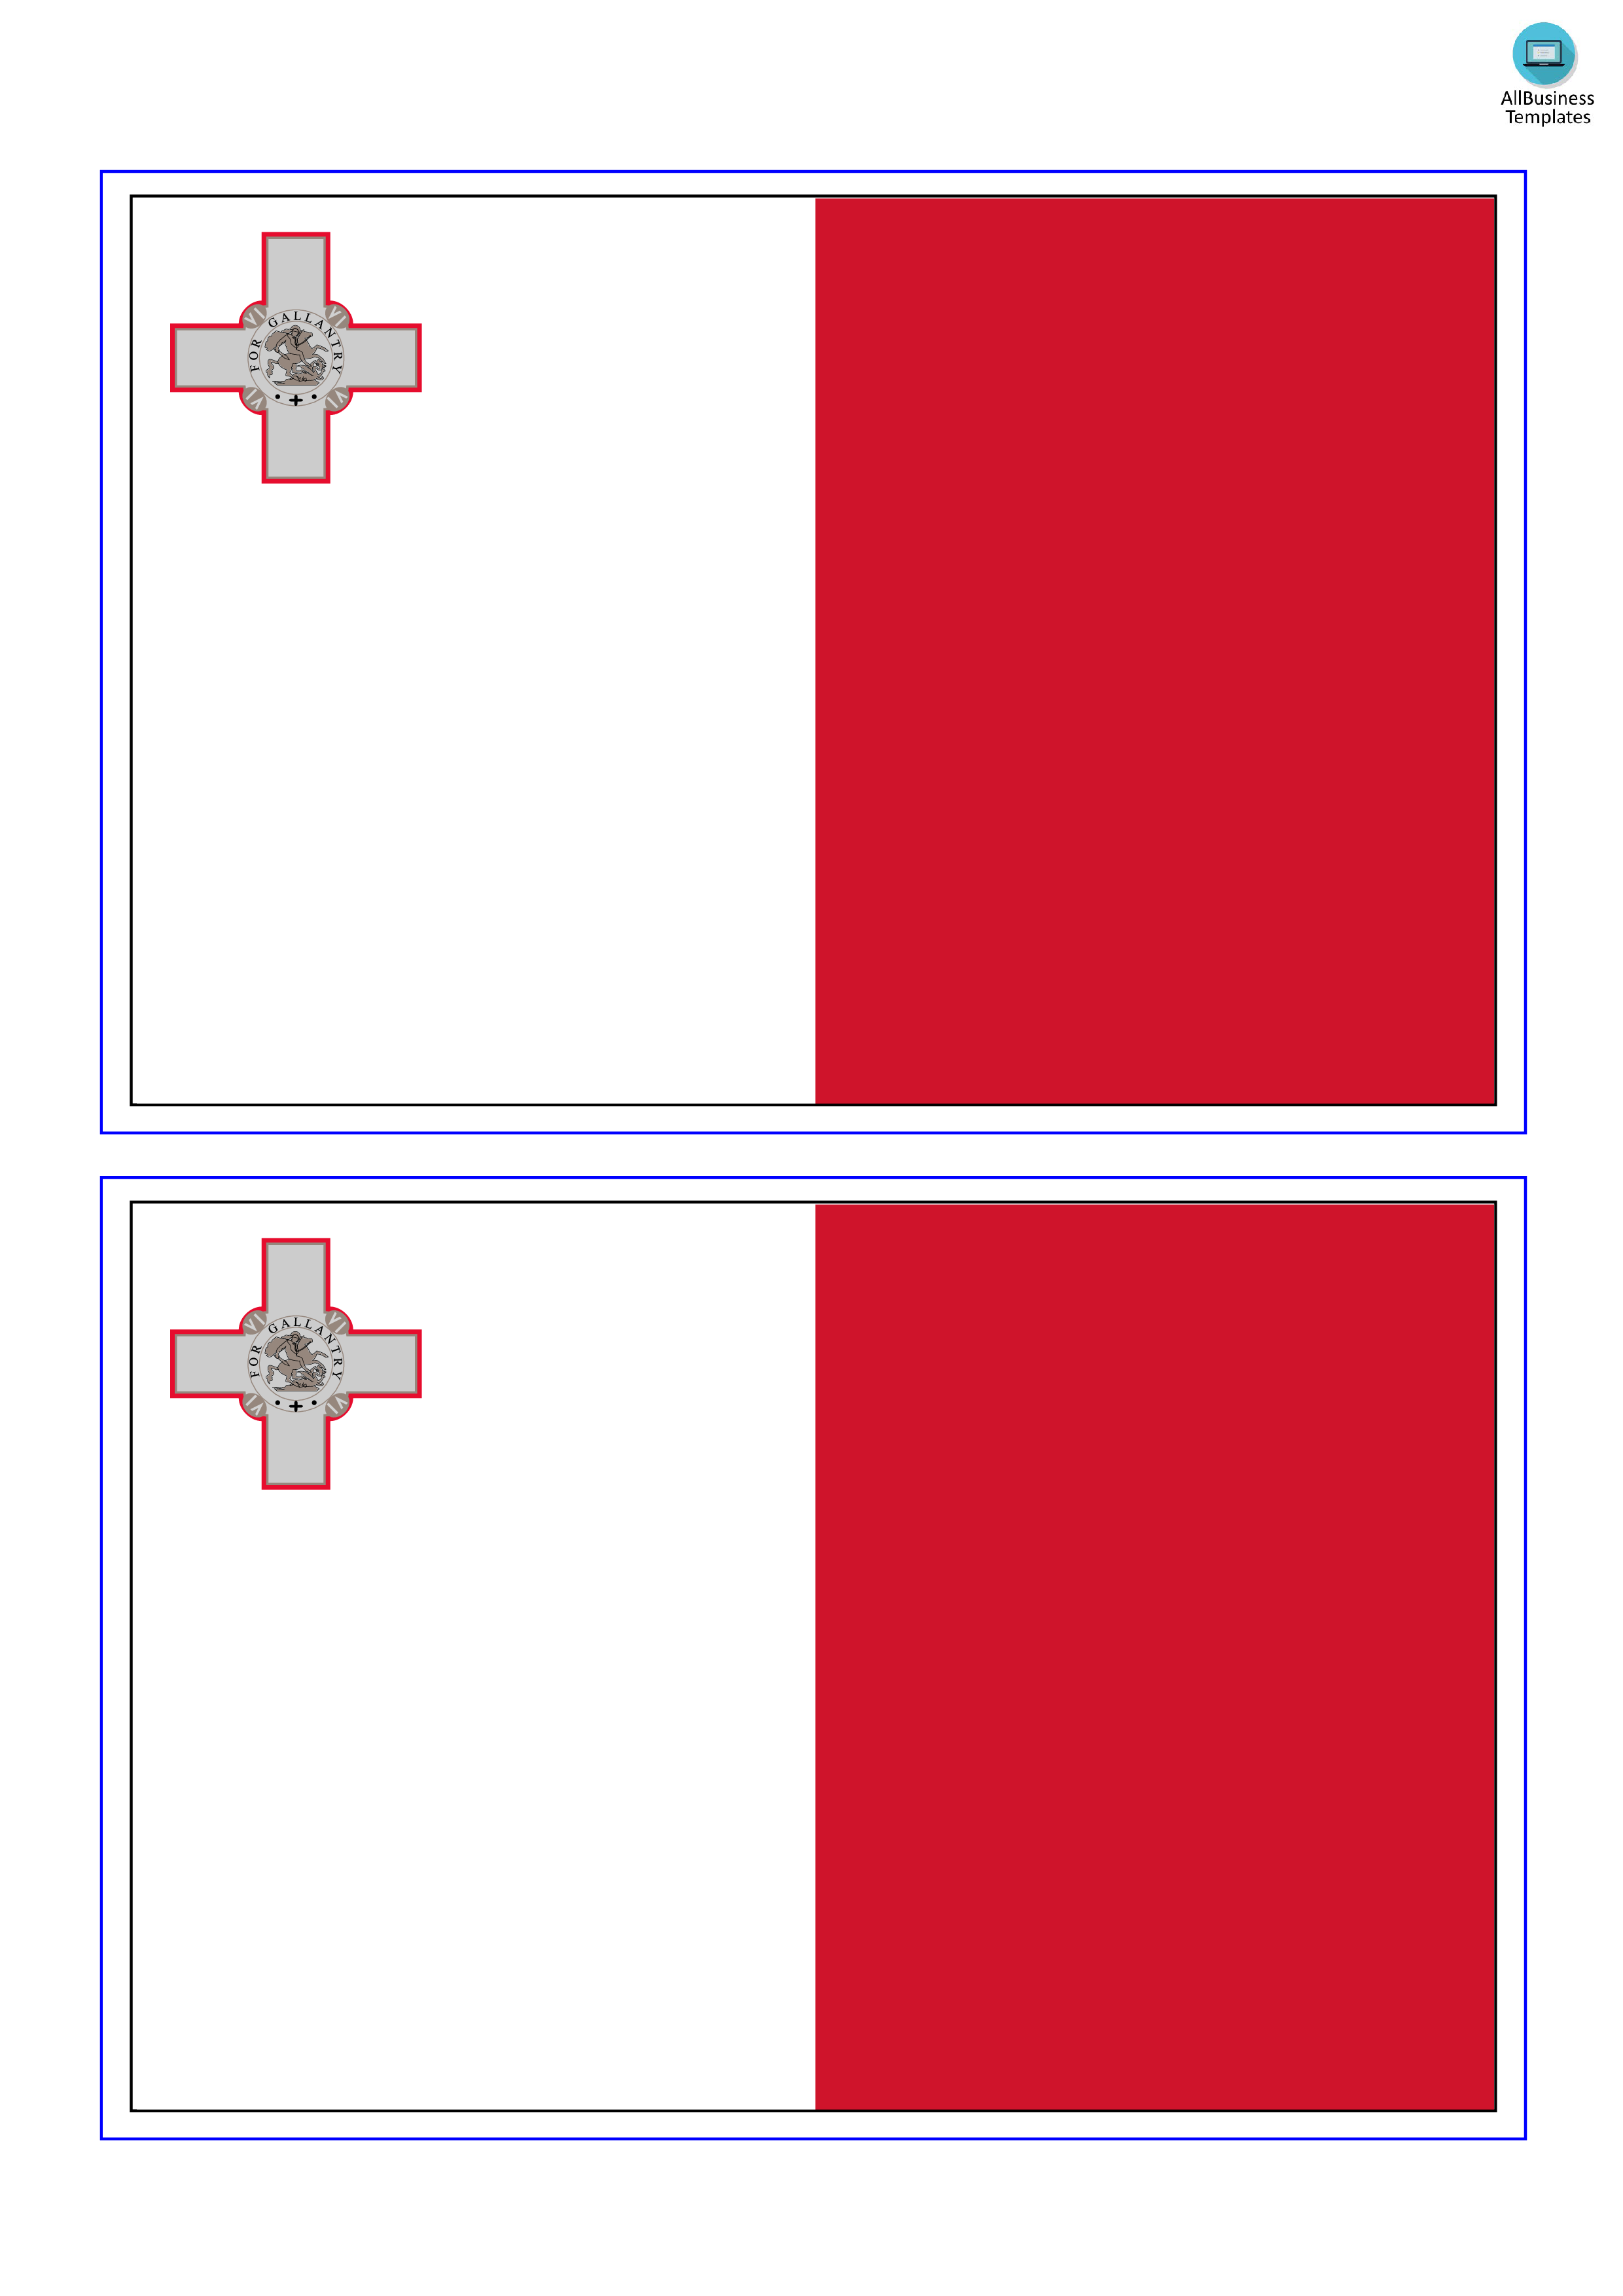 Malta Flag main image